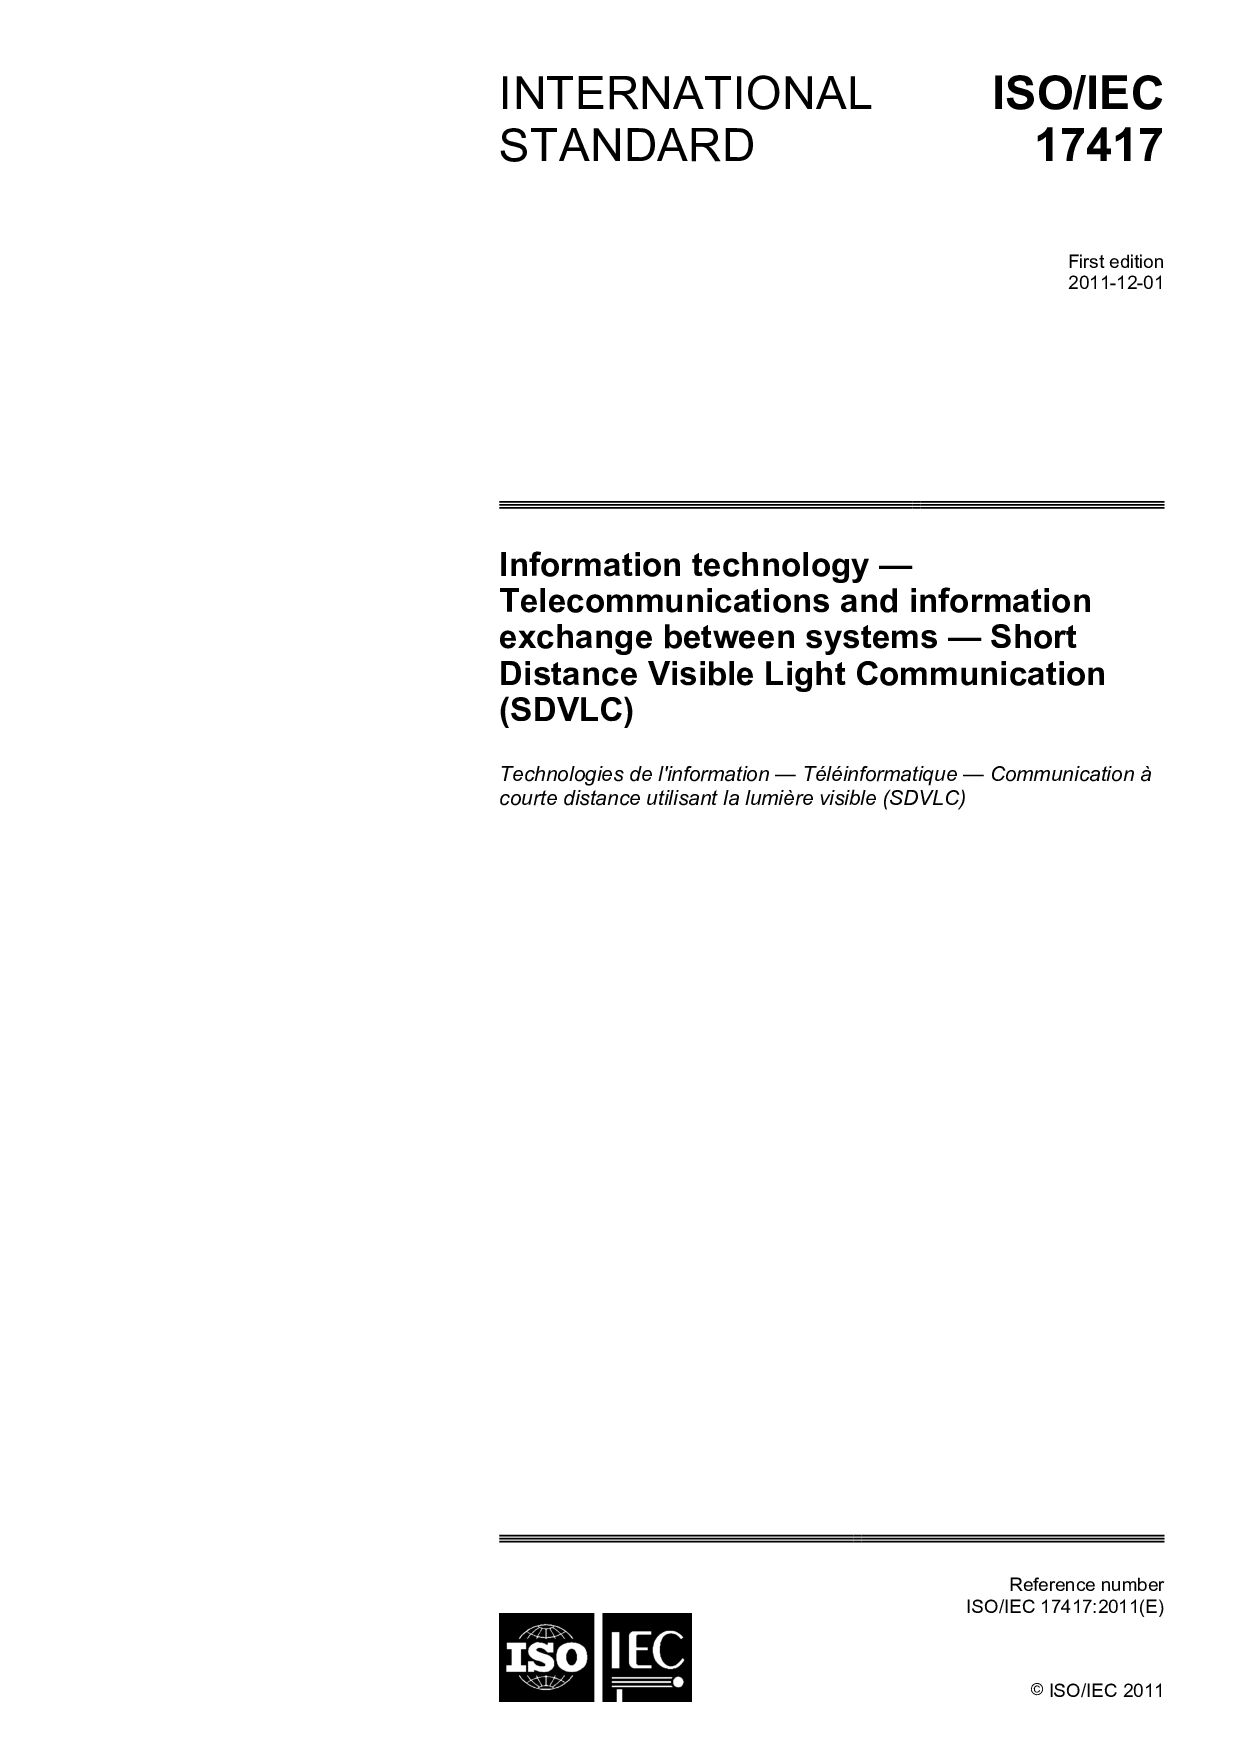 ISO/IEC 17417:2011